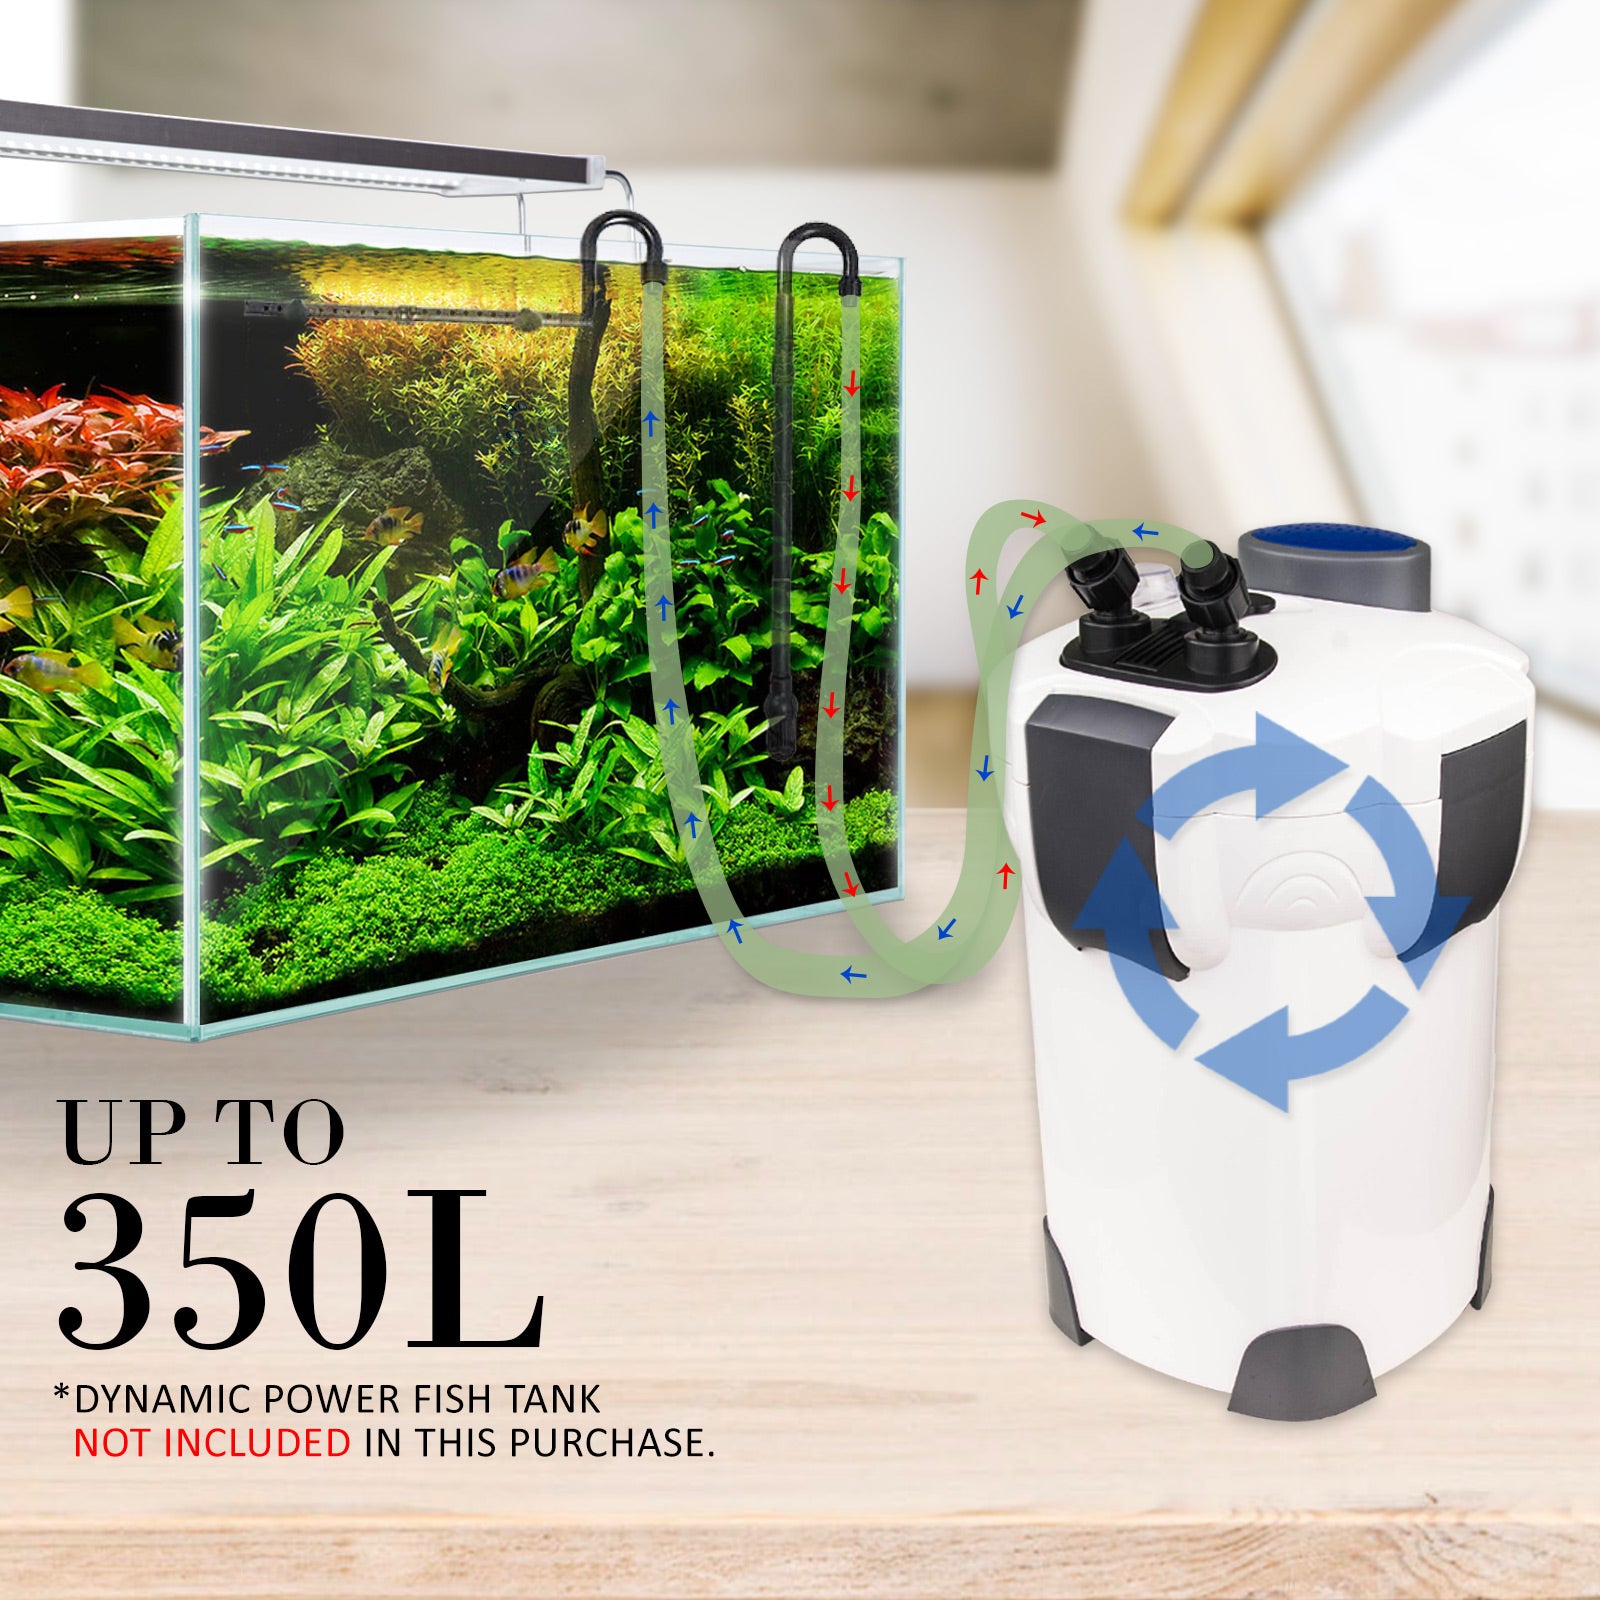 Aquarium UV Light External Canister Filter 1400L/H + Media Kit